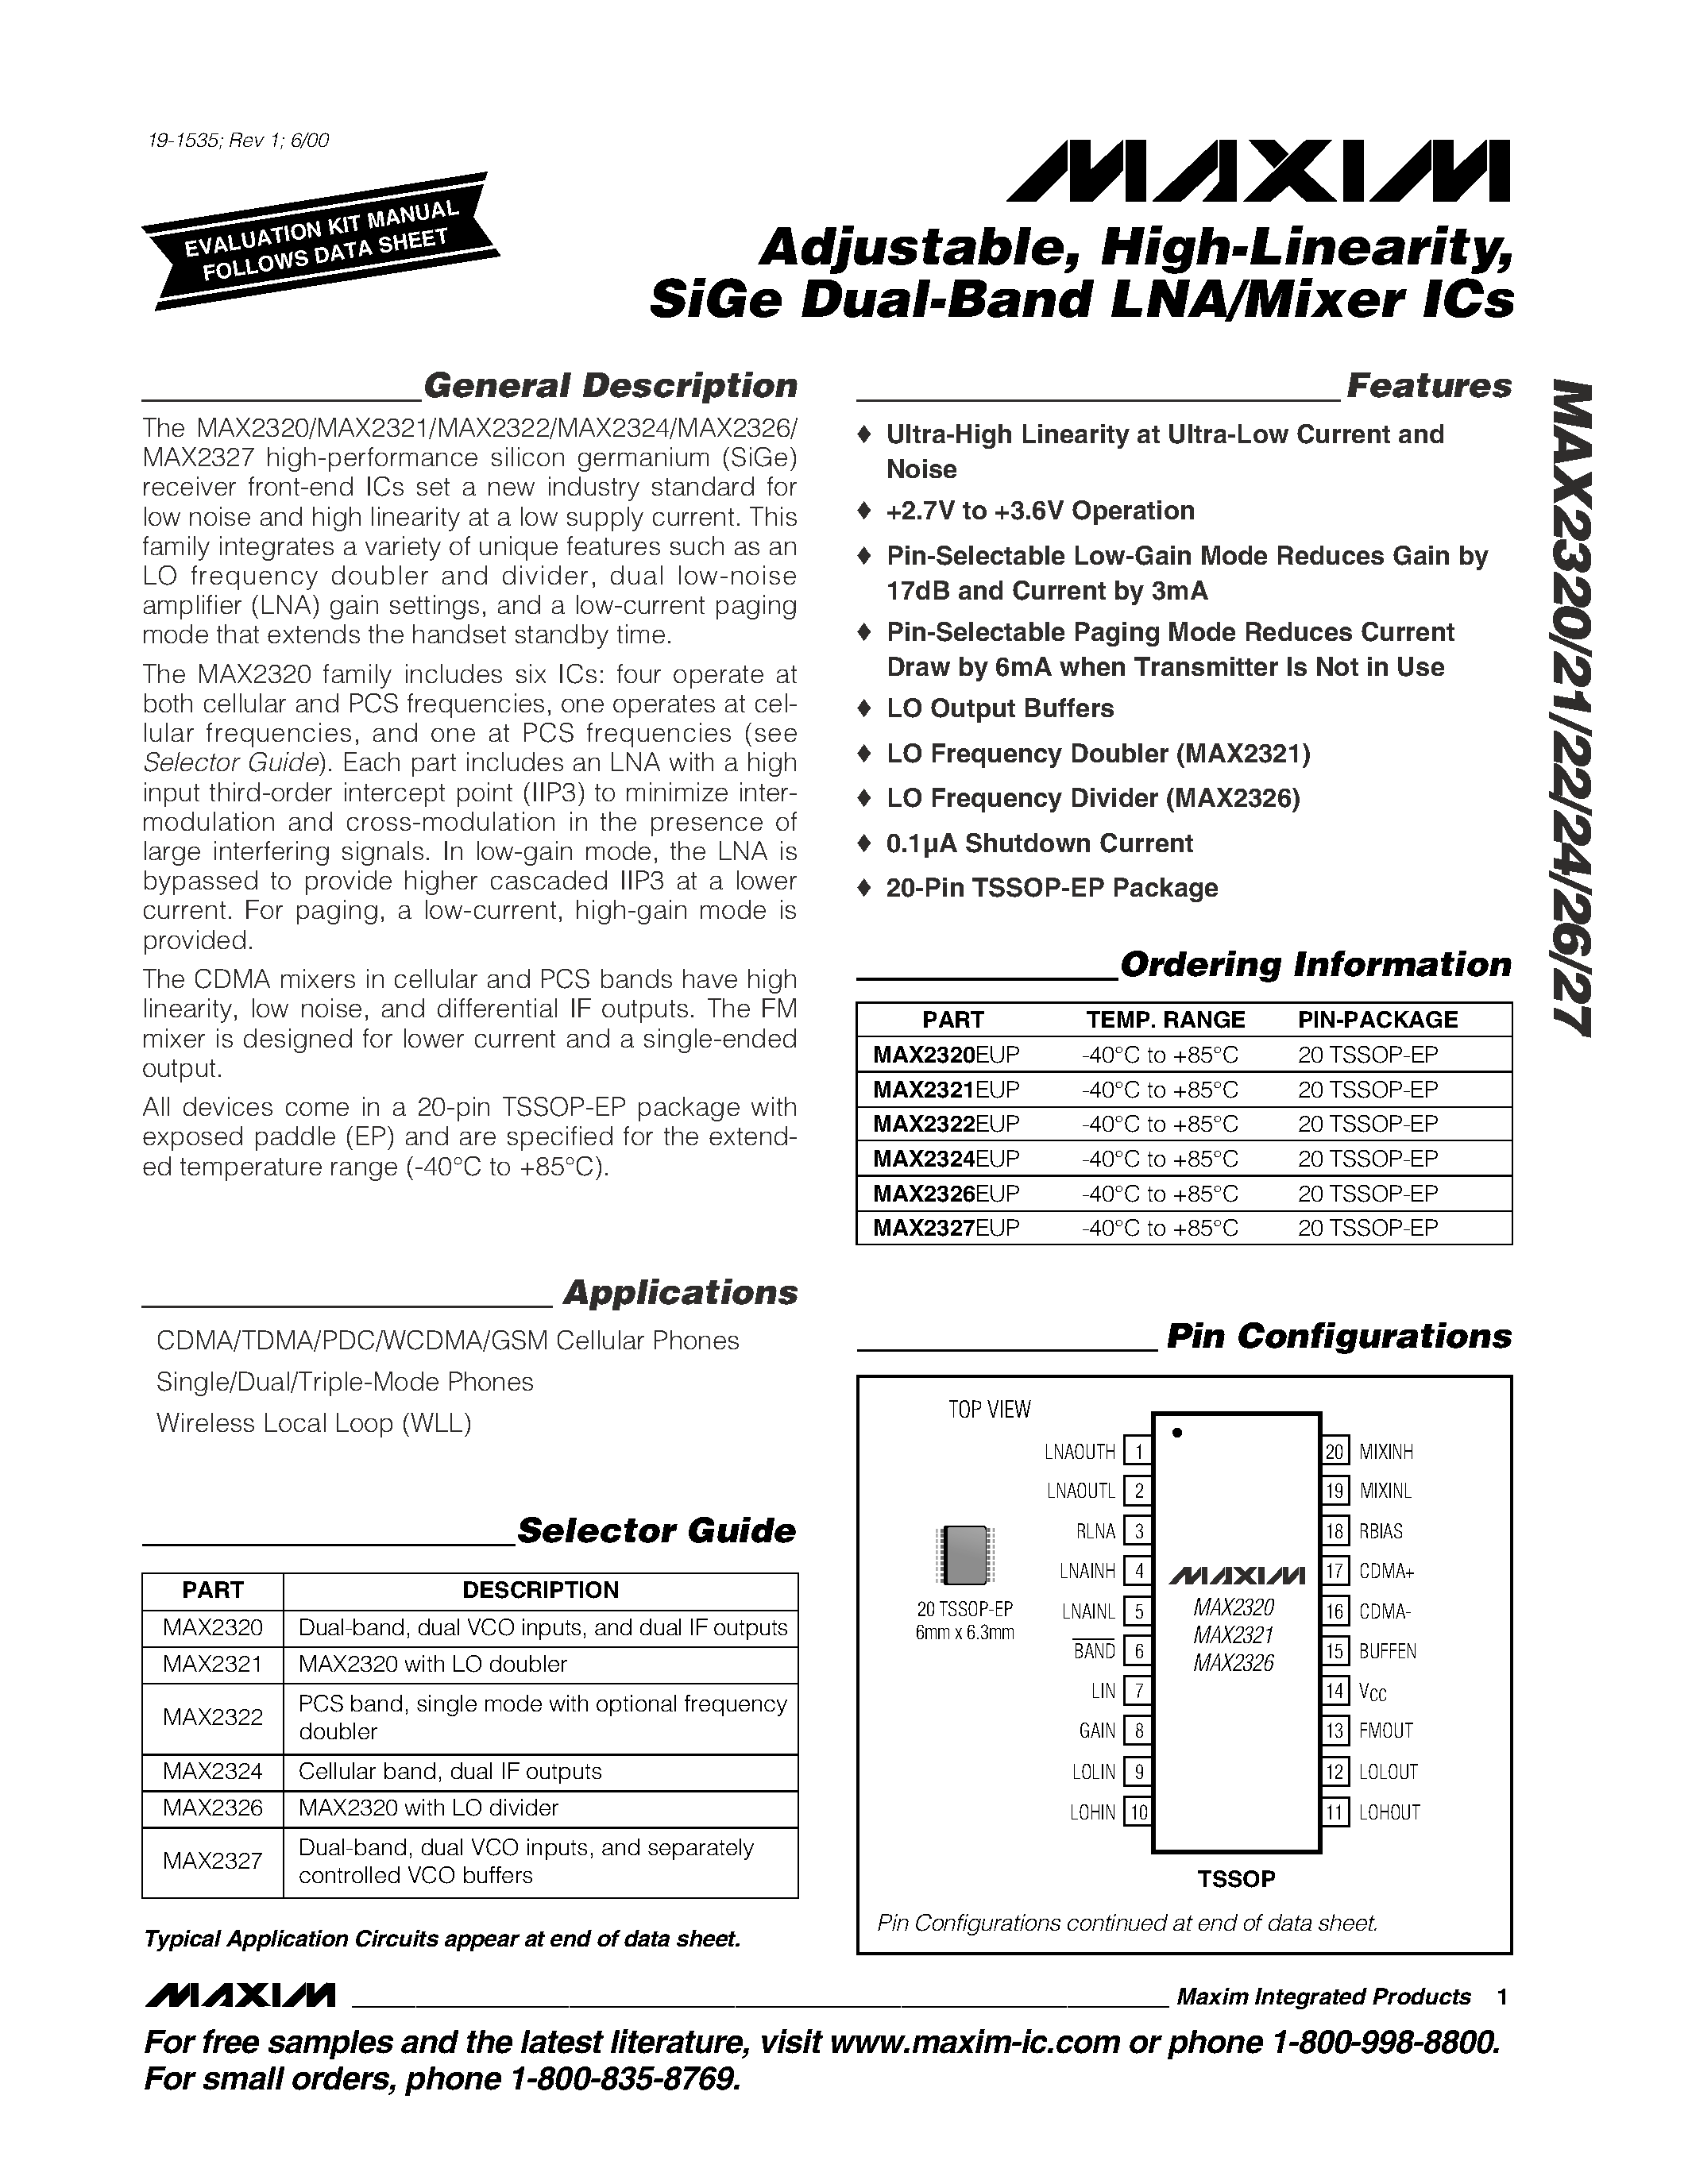 Datasheet MAX2327EUP - Adjustable / High-Linearity / SiGe Dual-Band LNA/Mixer ICs page 1